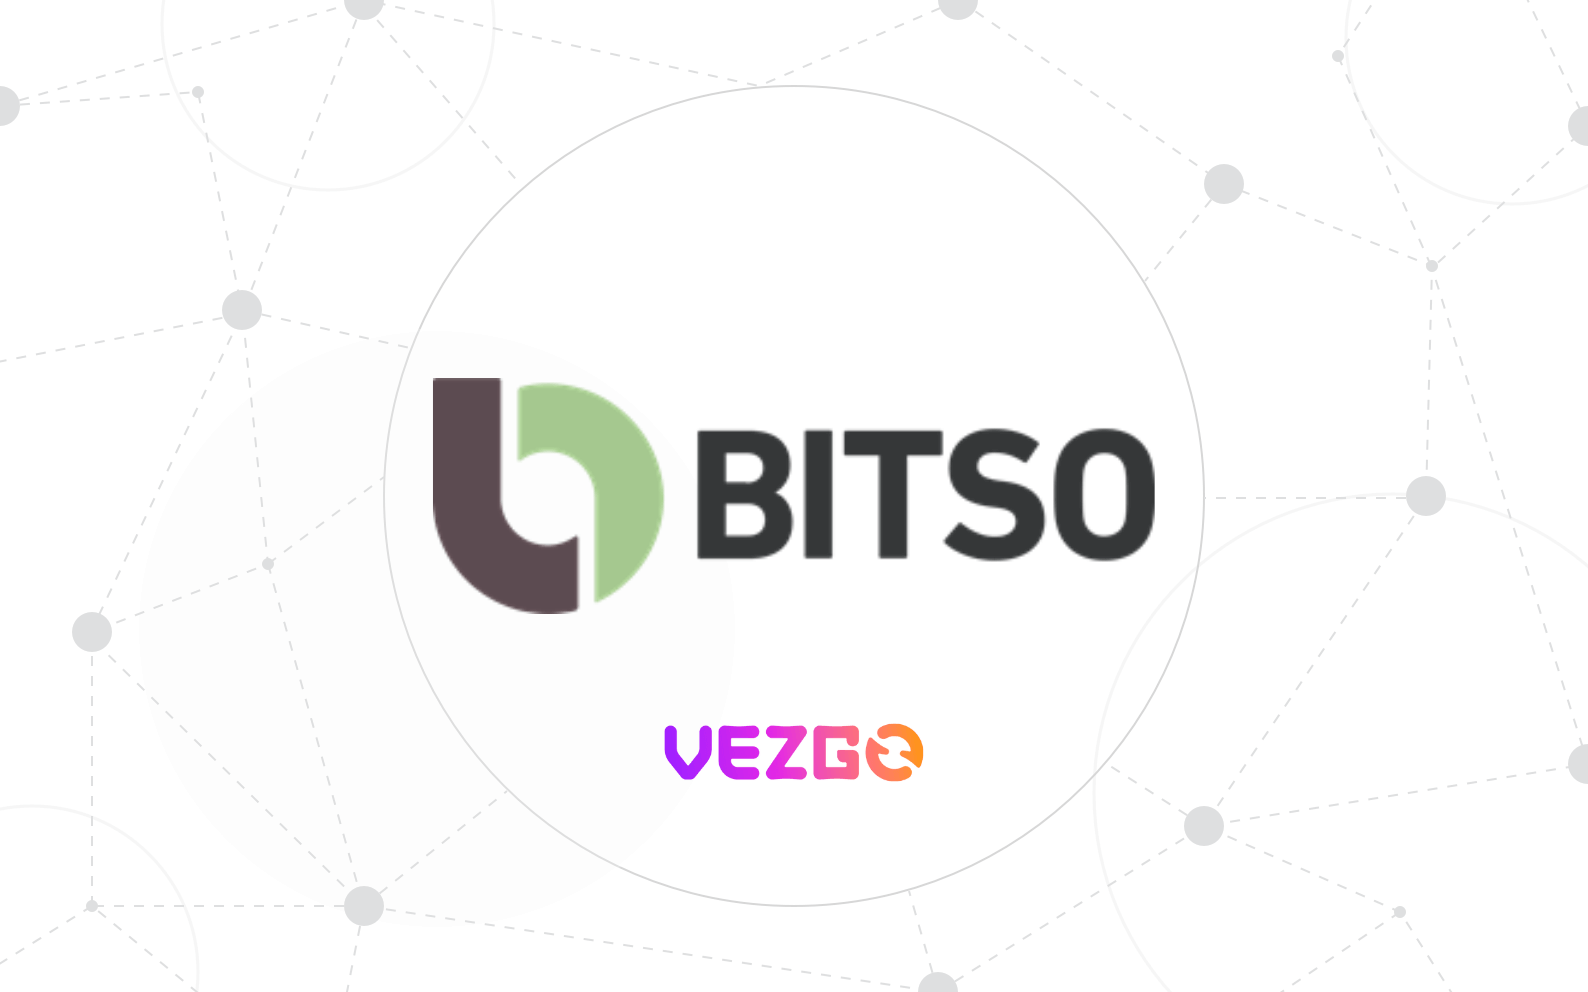 Vezgo Alternative to Bitso API